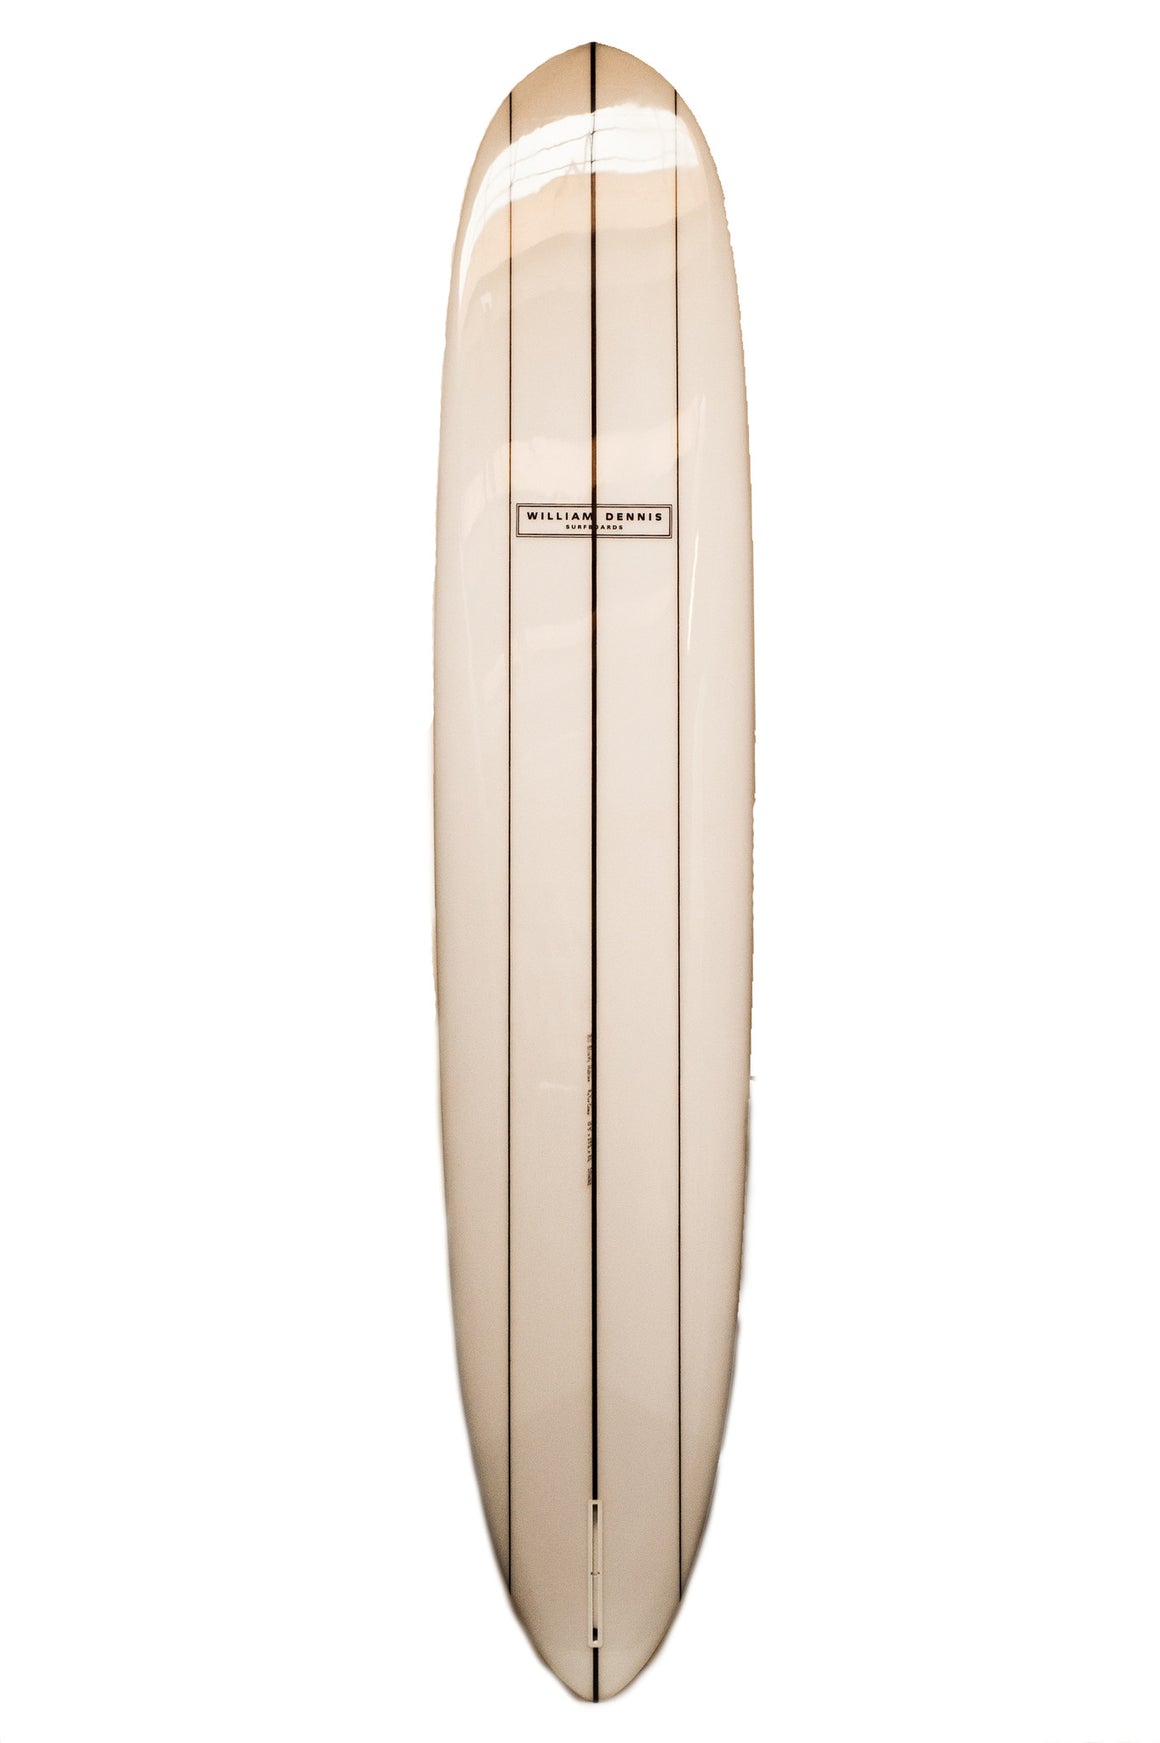 William Dennis Custom "Retro Comp" Longboard Surfboard - Ventura Surf Shop